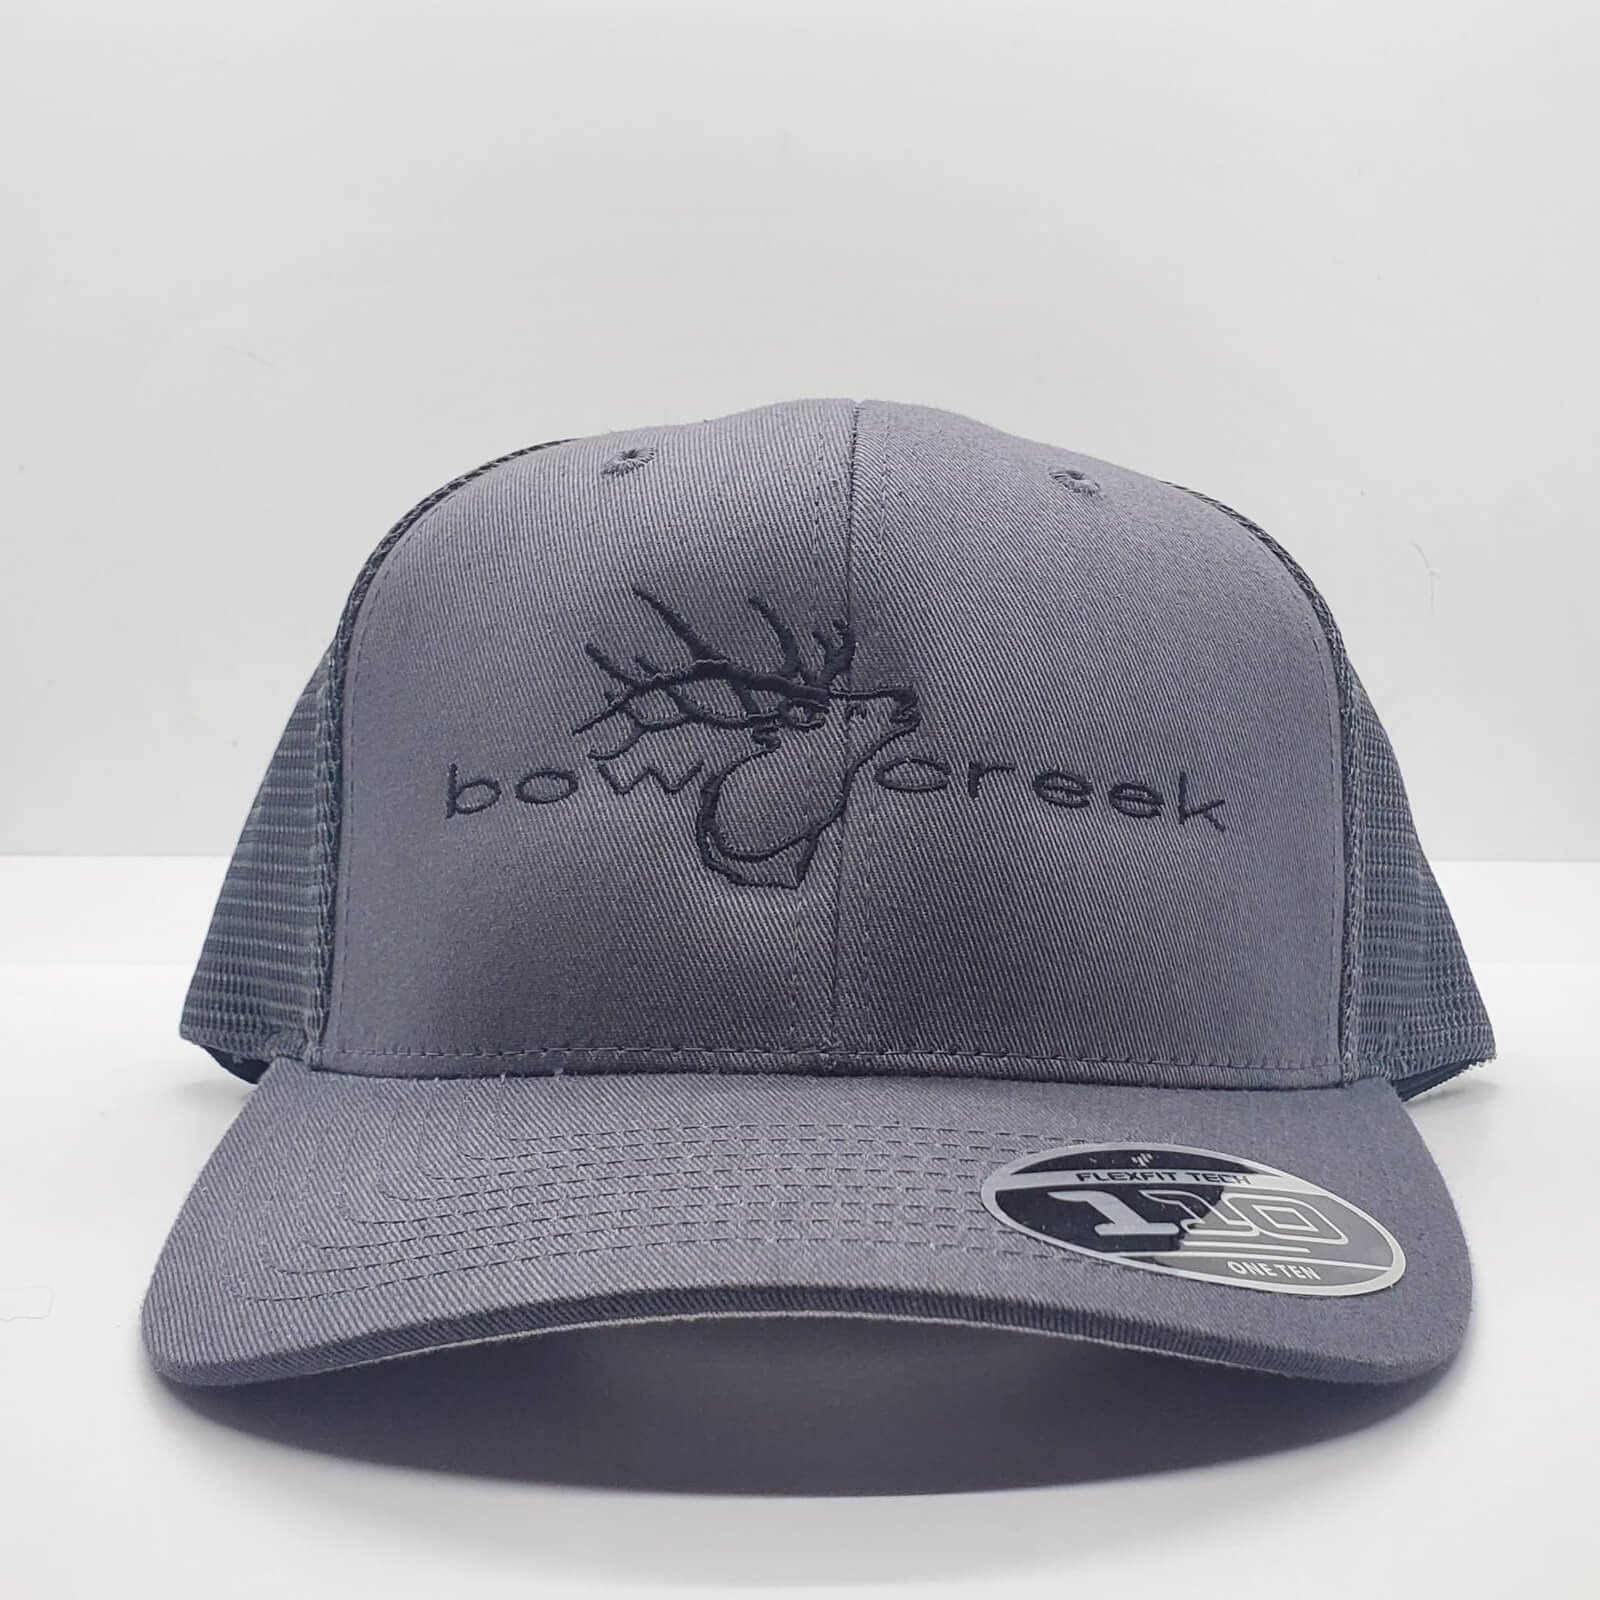 Flexfit 110 Snapback Bow Creek Elk Logo Hat - Gray - Bow Creek Outdoors